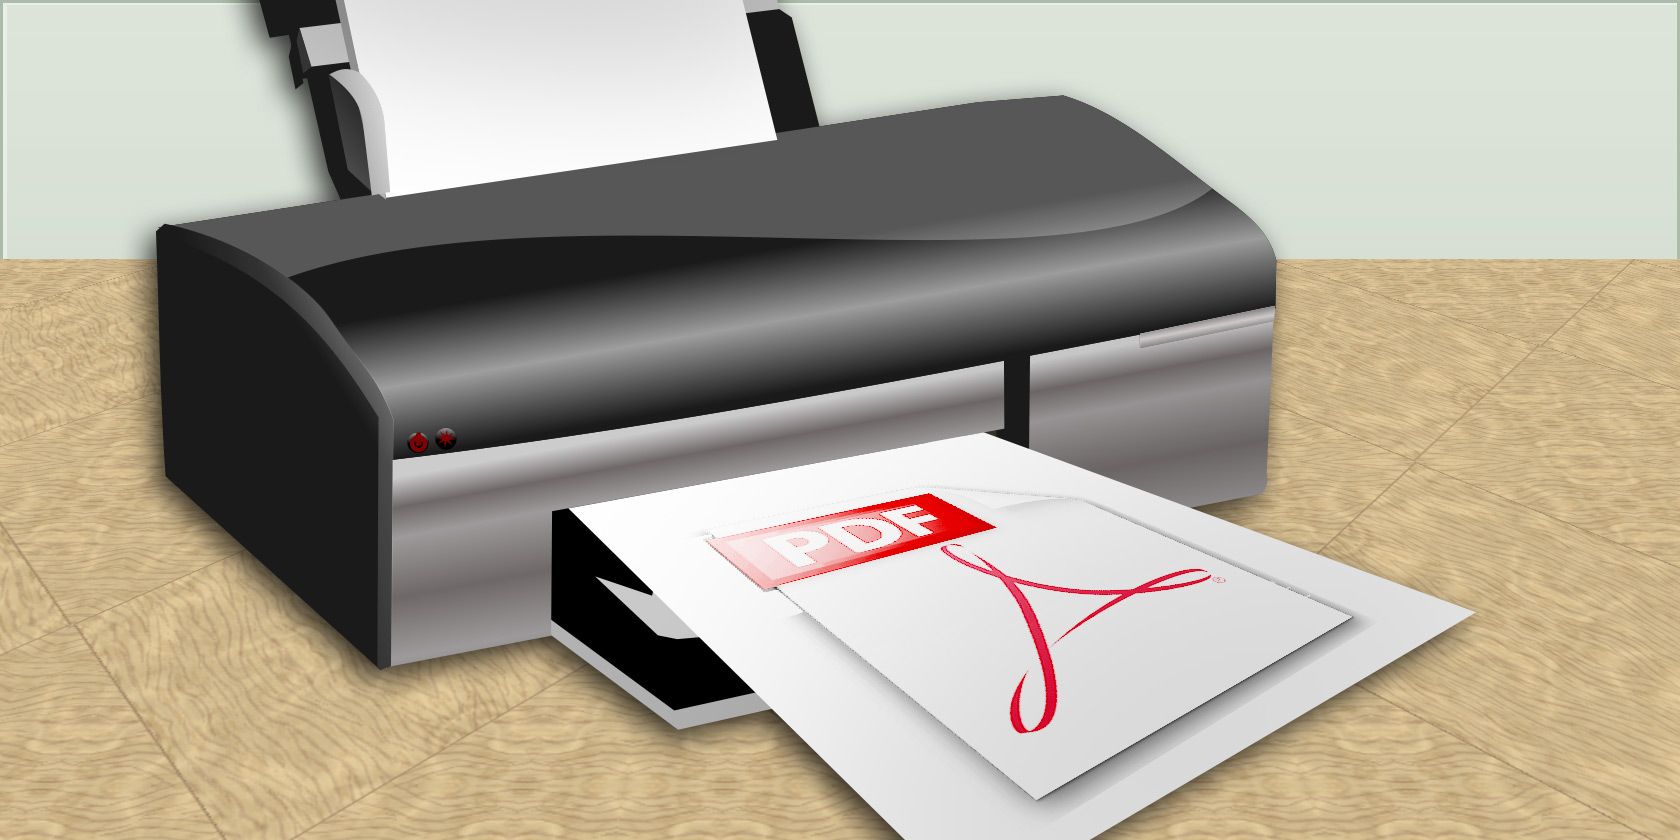 pdf printer for windows 8